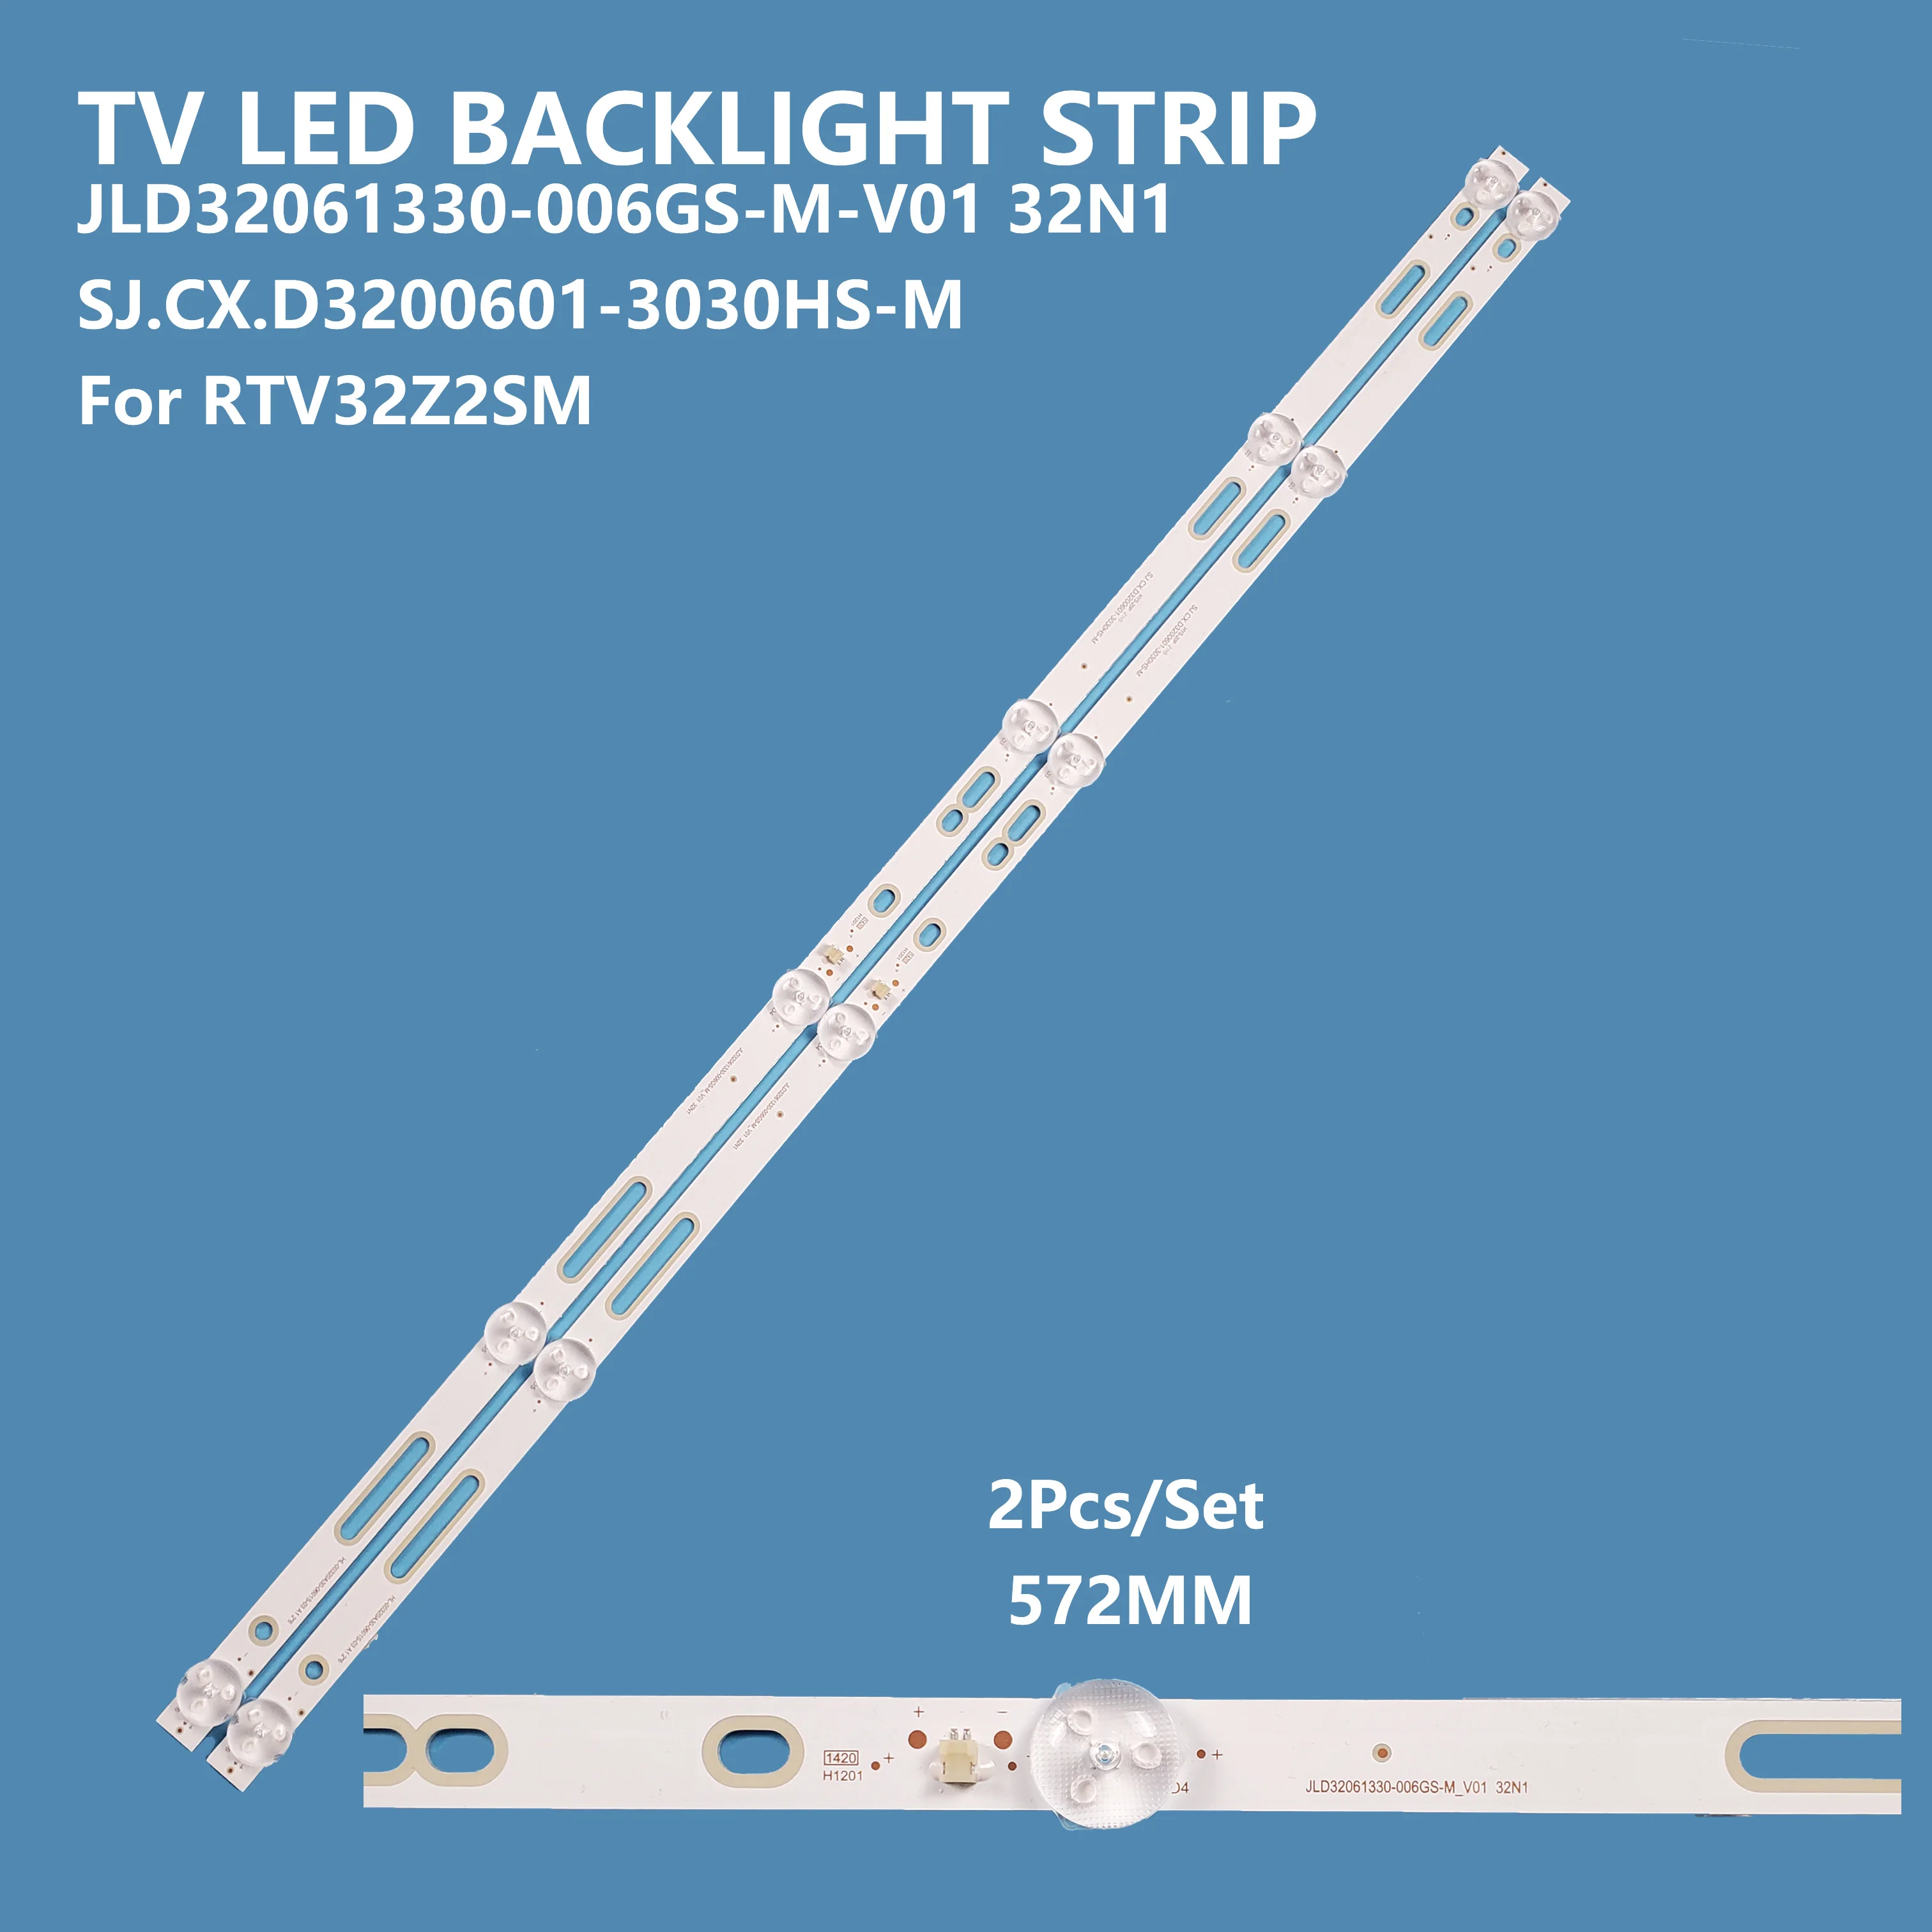 2Pcs/set LED Backlight Bar Light Strip JL.D32061330-006GS-M-V01 32N1 HL-00320A30-0601S-03 A1 for 32inch TV Accessories Repair h32d7100e h32d71100e tv s led backlight strips for dexp band ruler hl 00320a30 0601s 07 a1 2 6 hl 00320a30 0601s 03 a1 2 6 lane